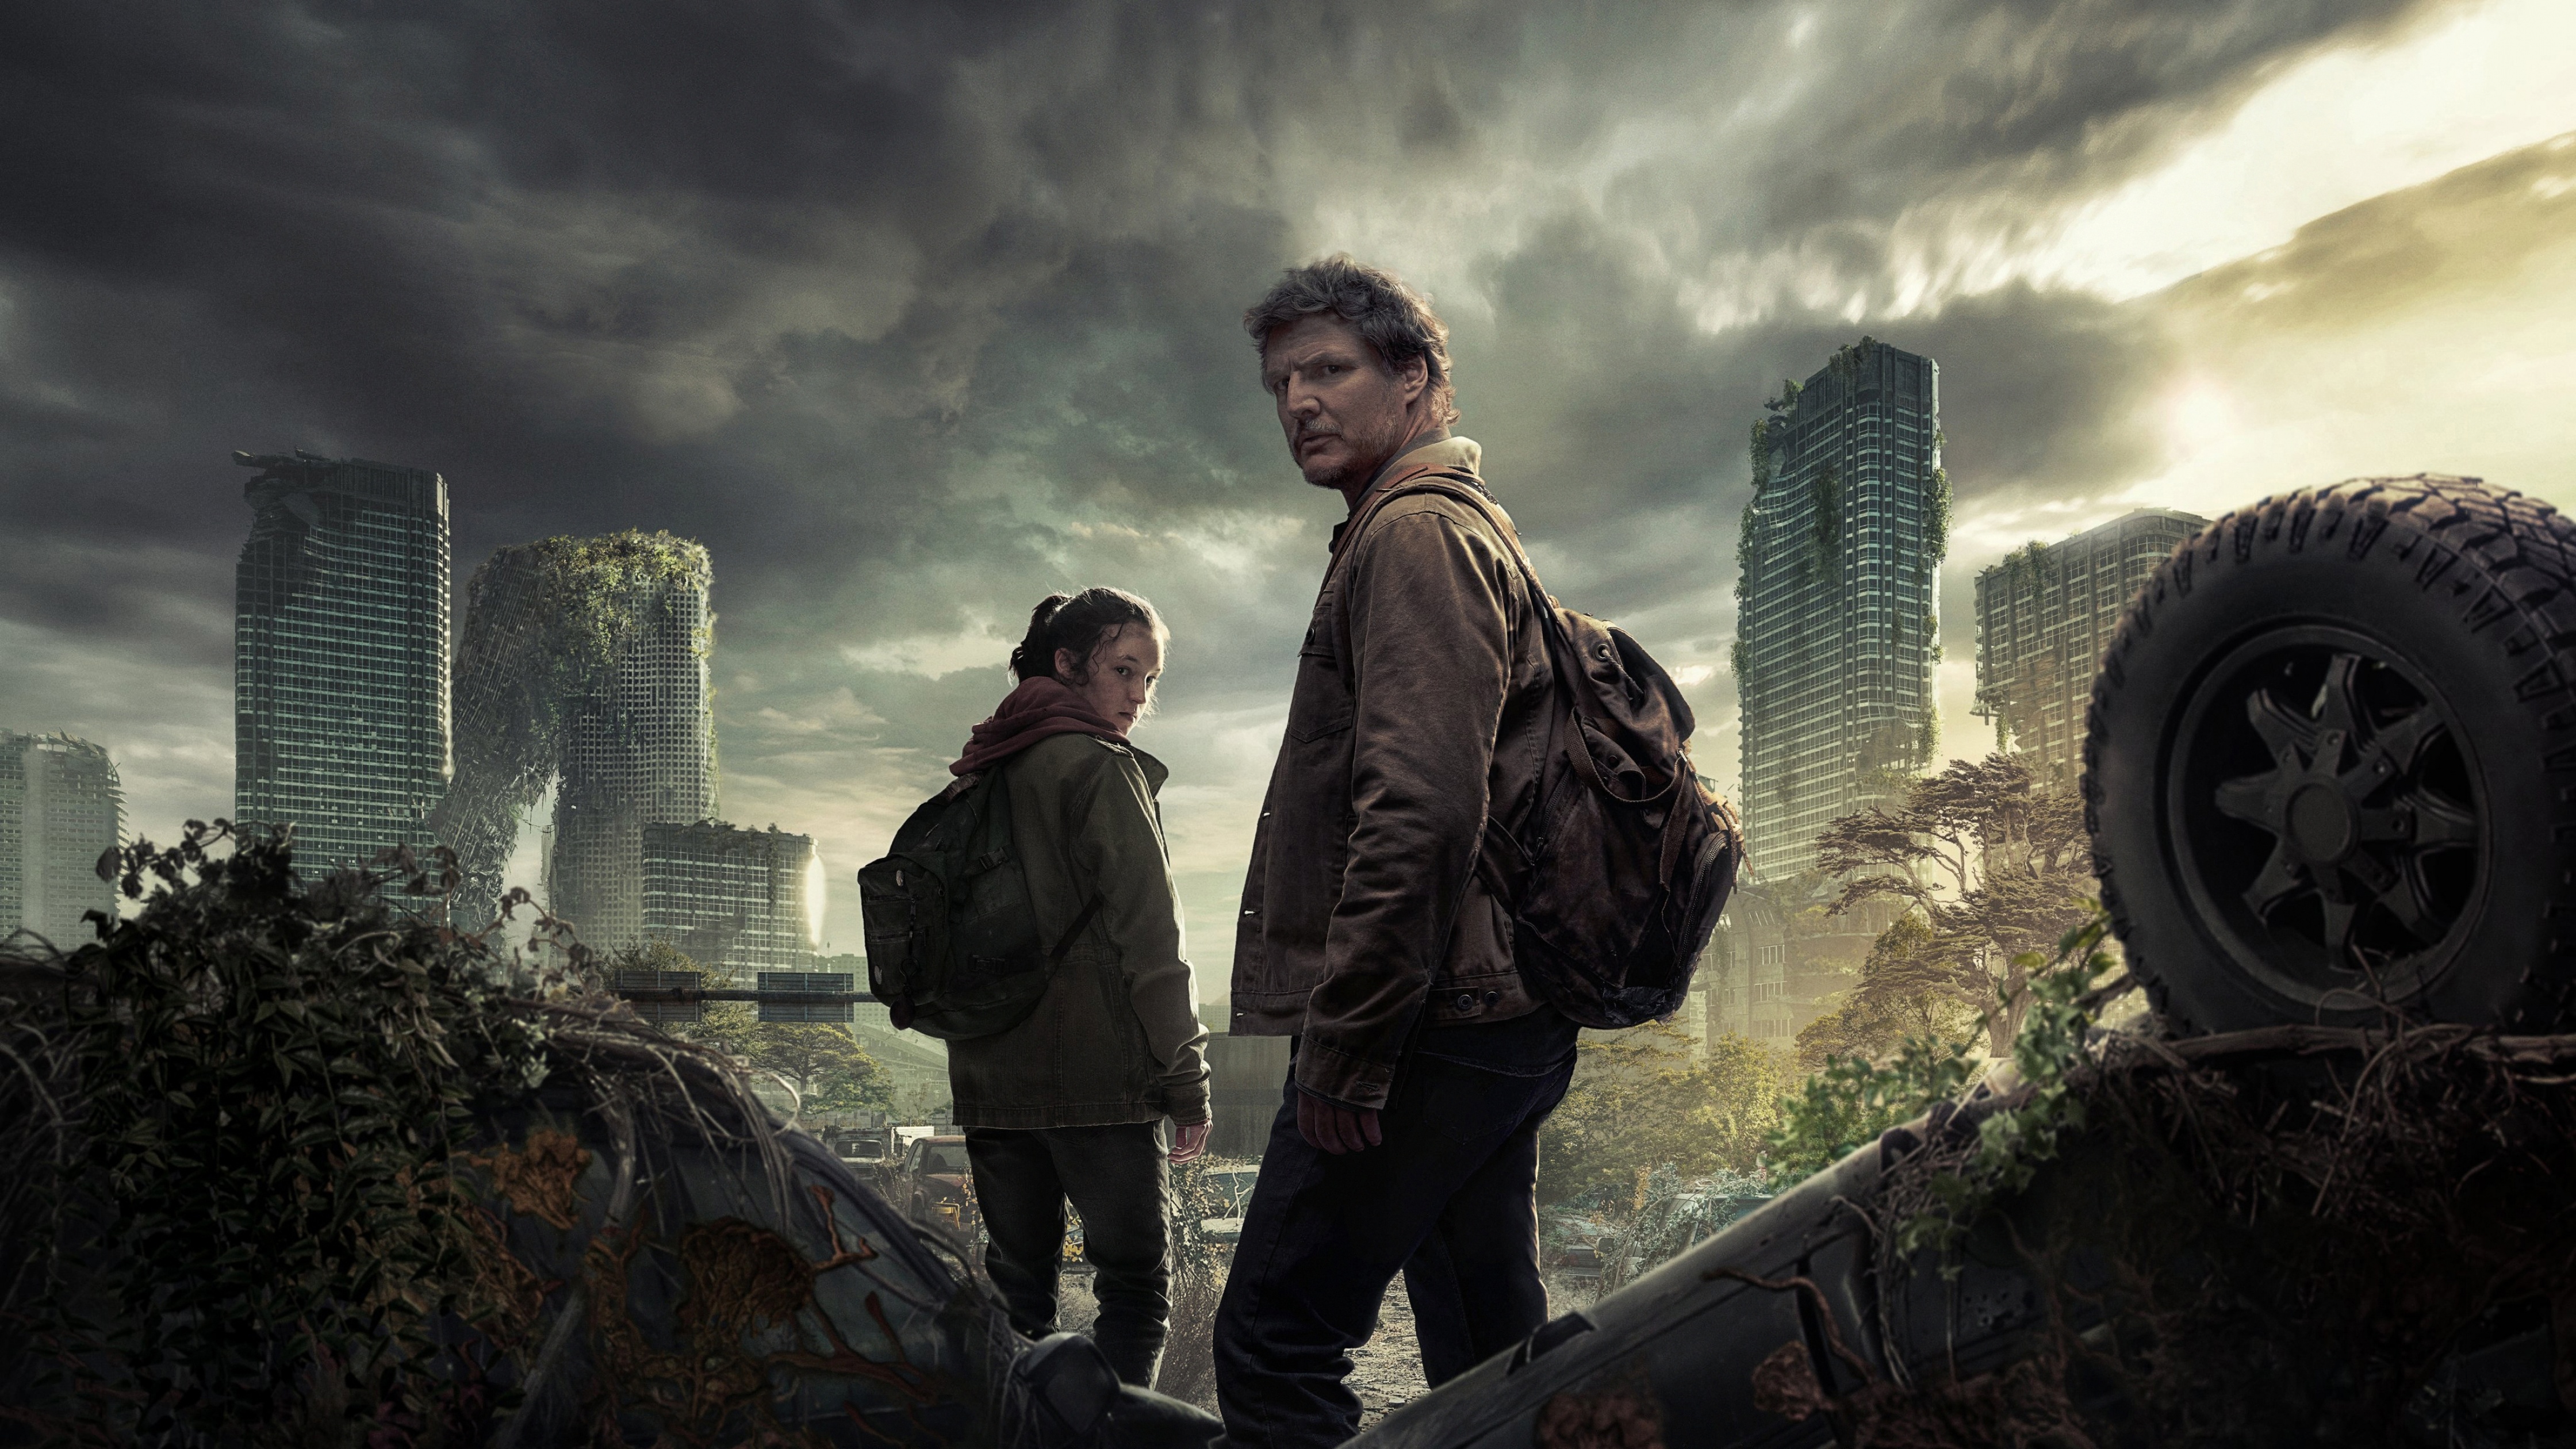 The Last of Us Wallpaper 4K, 2023 Series, Movies